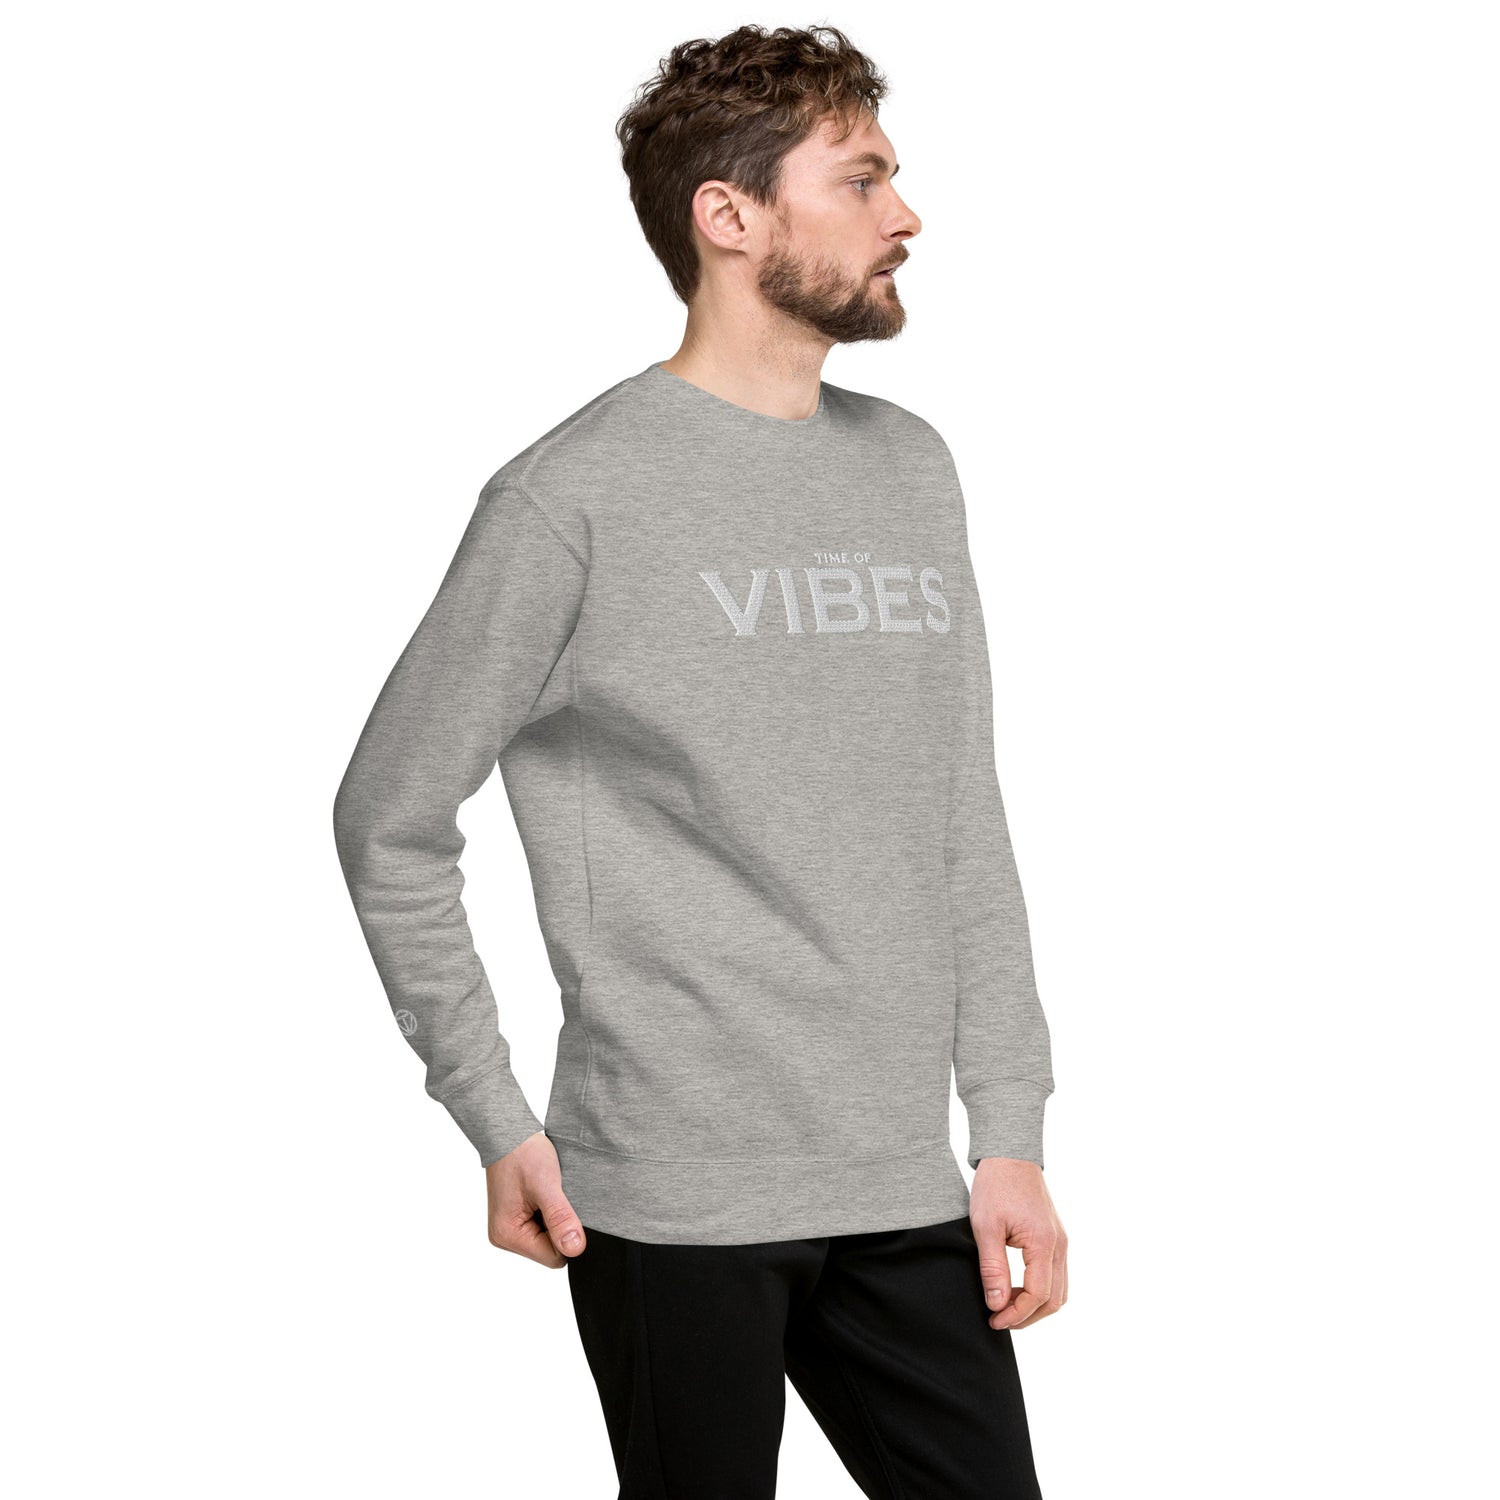 TIME OF VIBES Premium Sweatshirt VIBES (Grau/Weiß) - €59,00